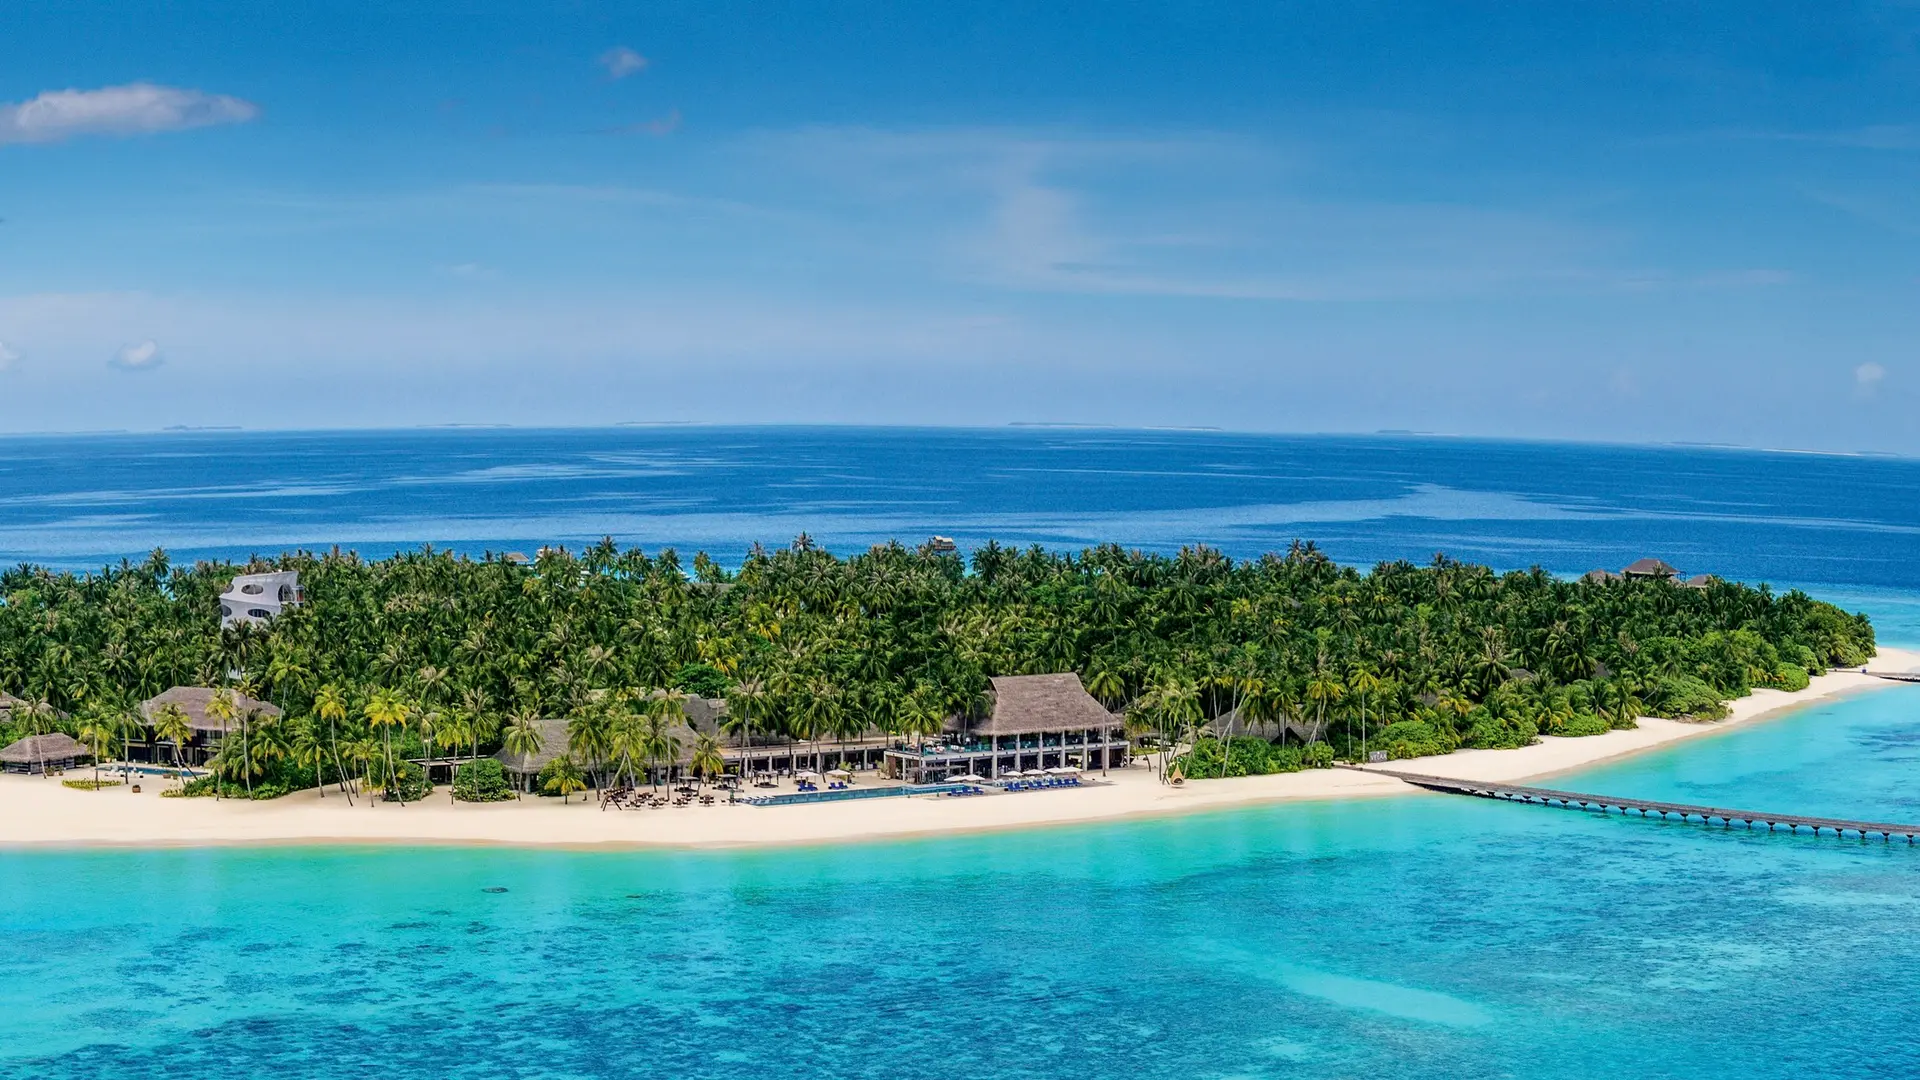 Hotel review Location' - Velaa Private Island - 0